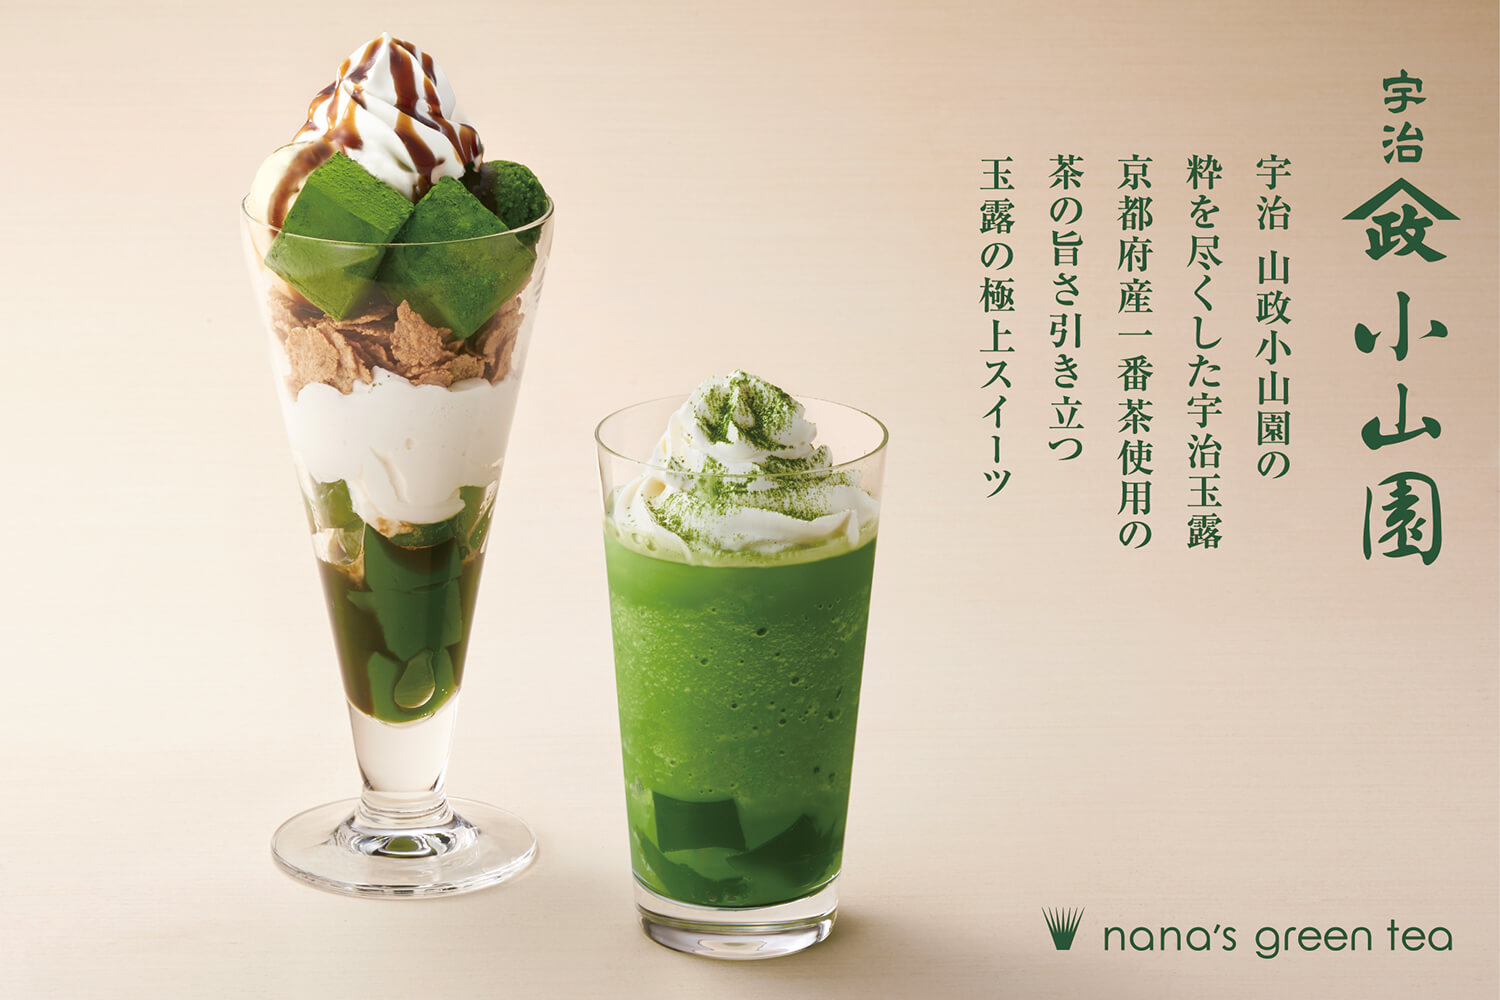 nanas-green-tea-dessert-%e5%92%8c%e3%82%b9%e3%82%a4%e3%83%bc%e3%83%84-%e7%94%9c%e9%bb%9e